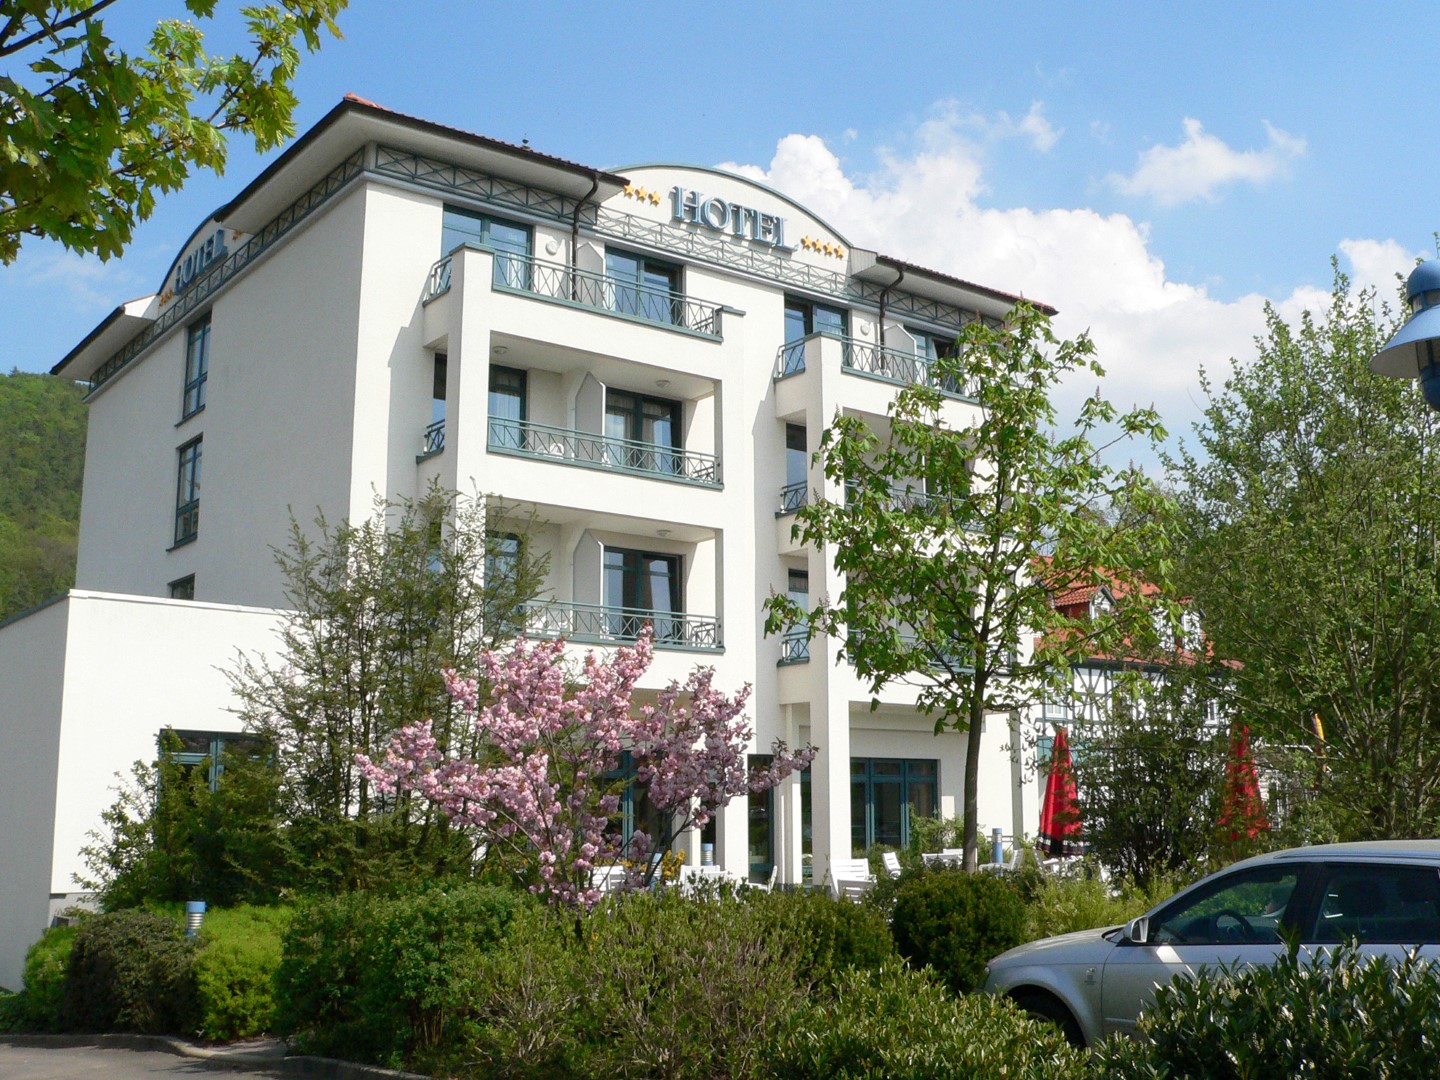 Göbel's Hotel Aqua Vita <br/>167.00 ew <br/> <a href='http://vakantieoplossing.nl/outpage/?id=5a64bff84864a7486bb5826fd10abb7d' target='_blank'>View Details</a>